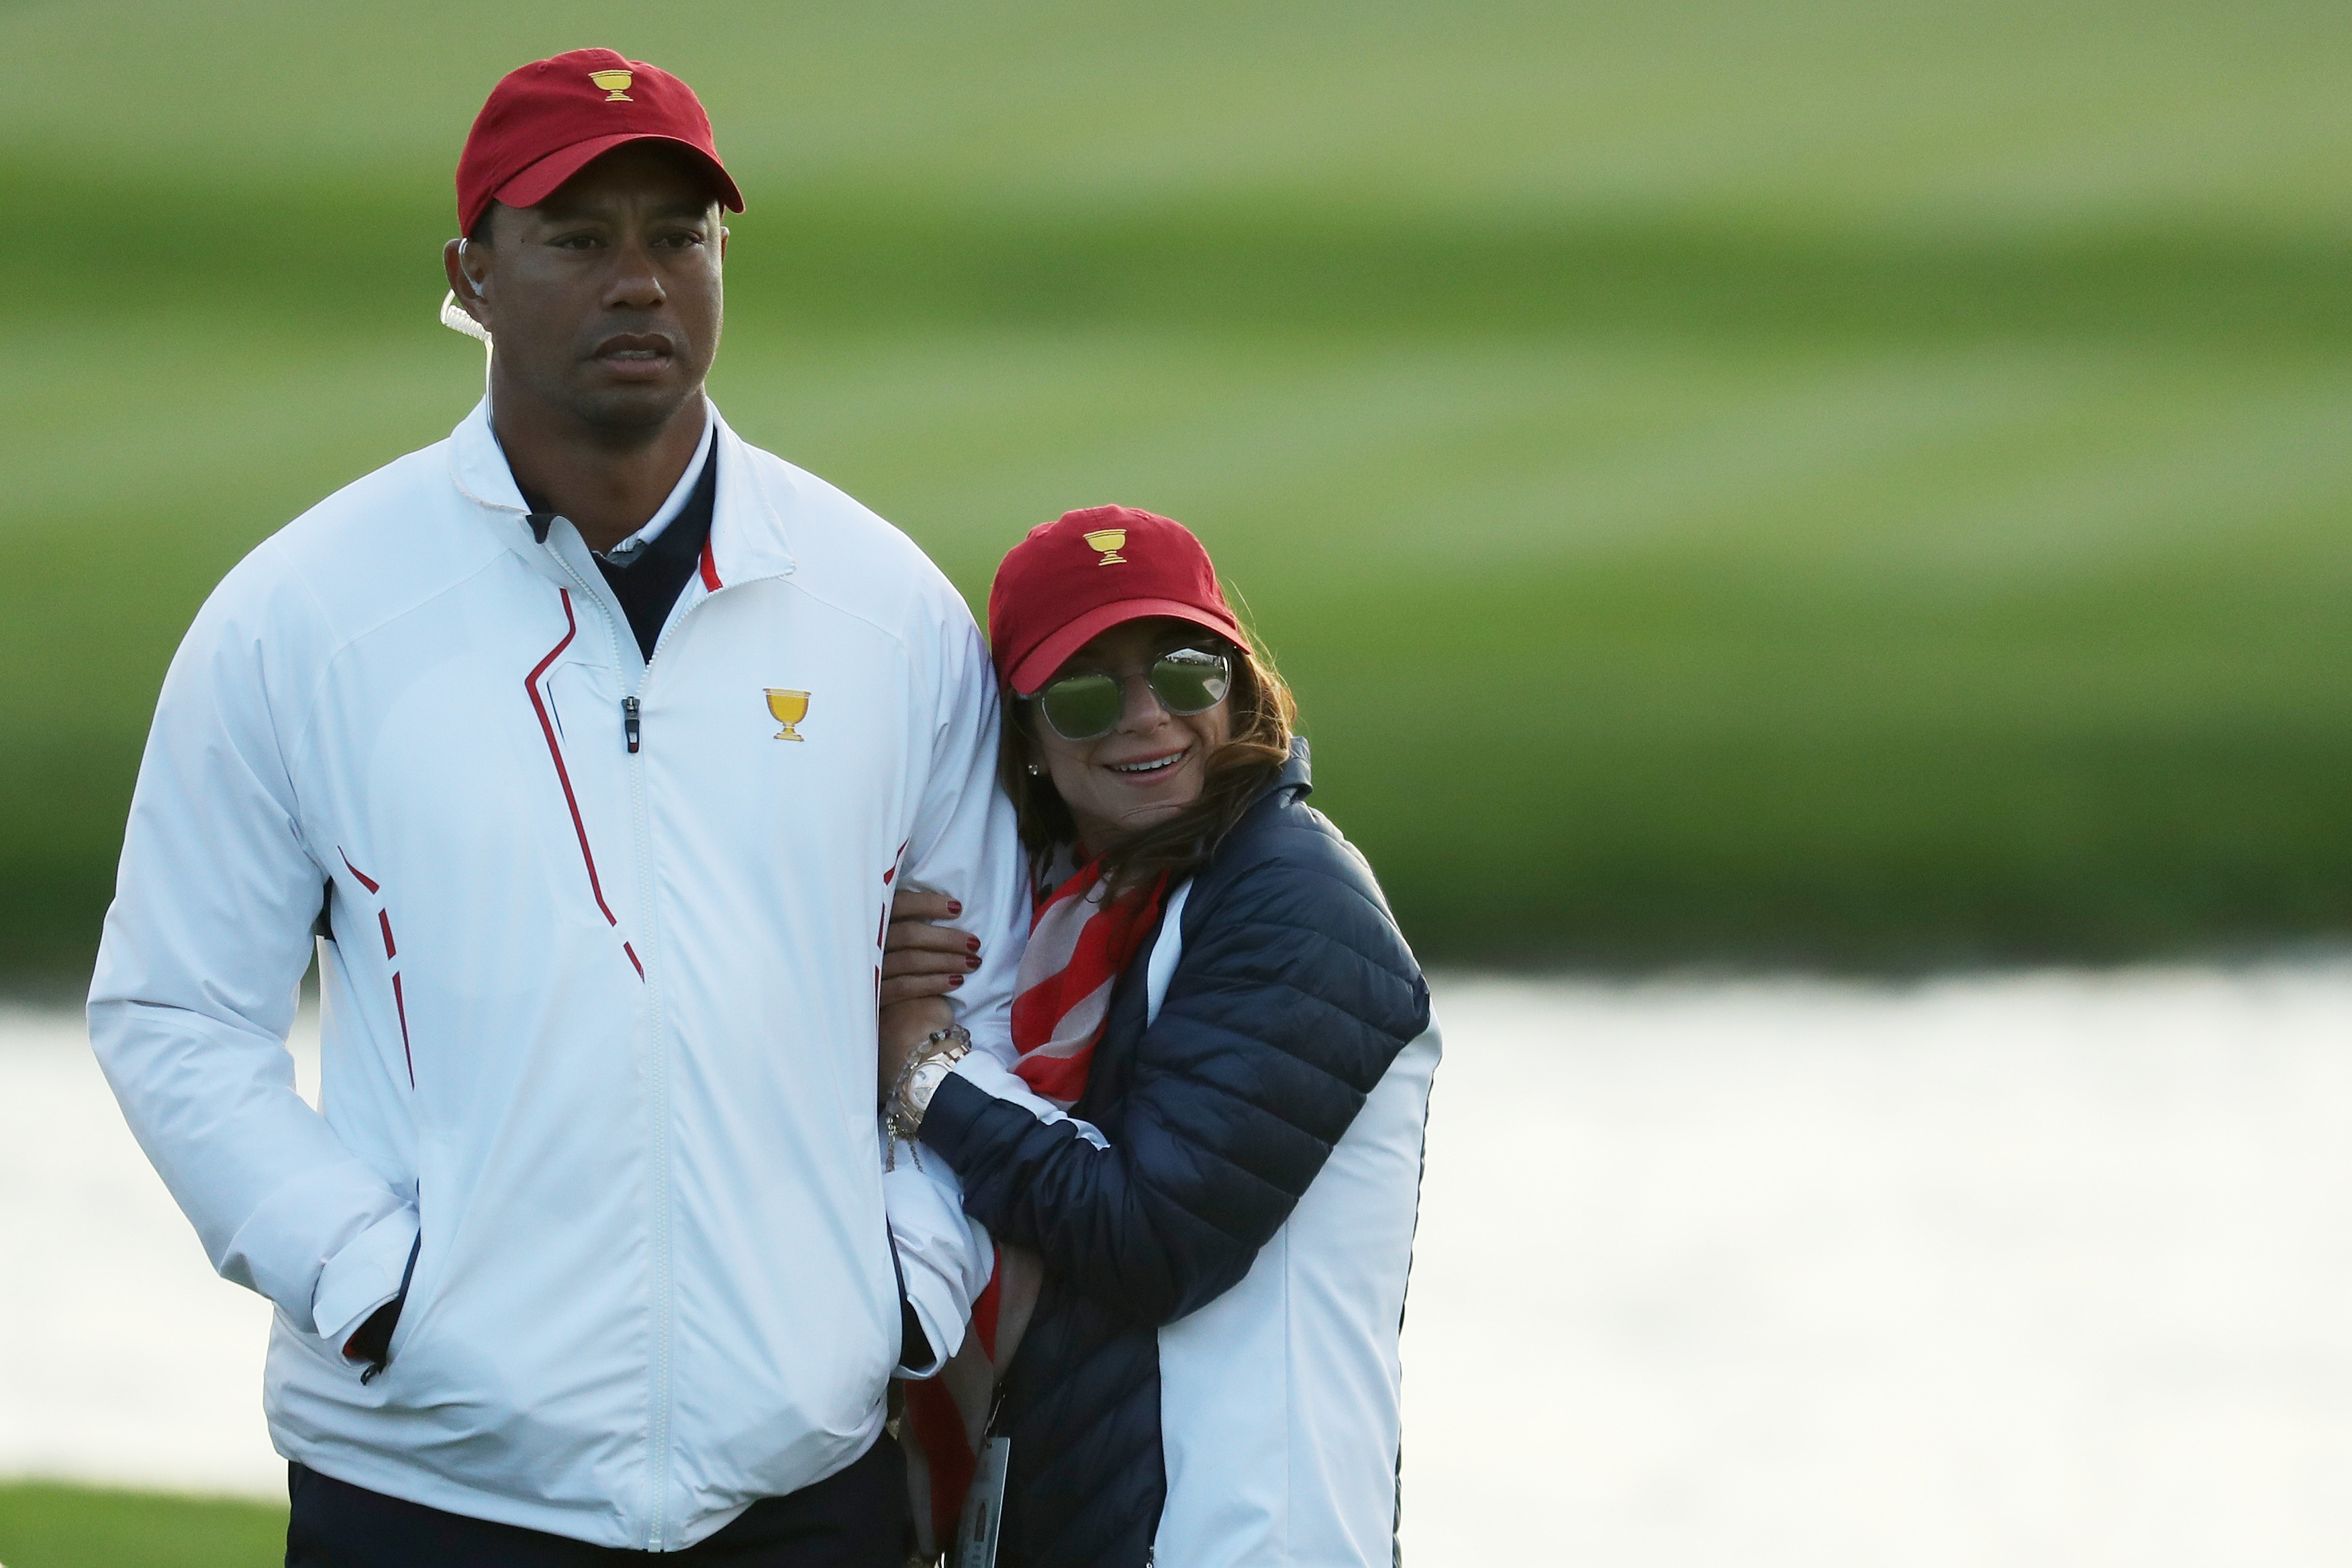 Tiger Woods ex-girlfriend must abide by NDA in $40M lawsuit, judge rules pic